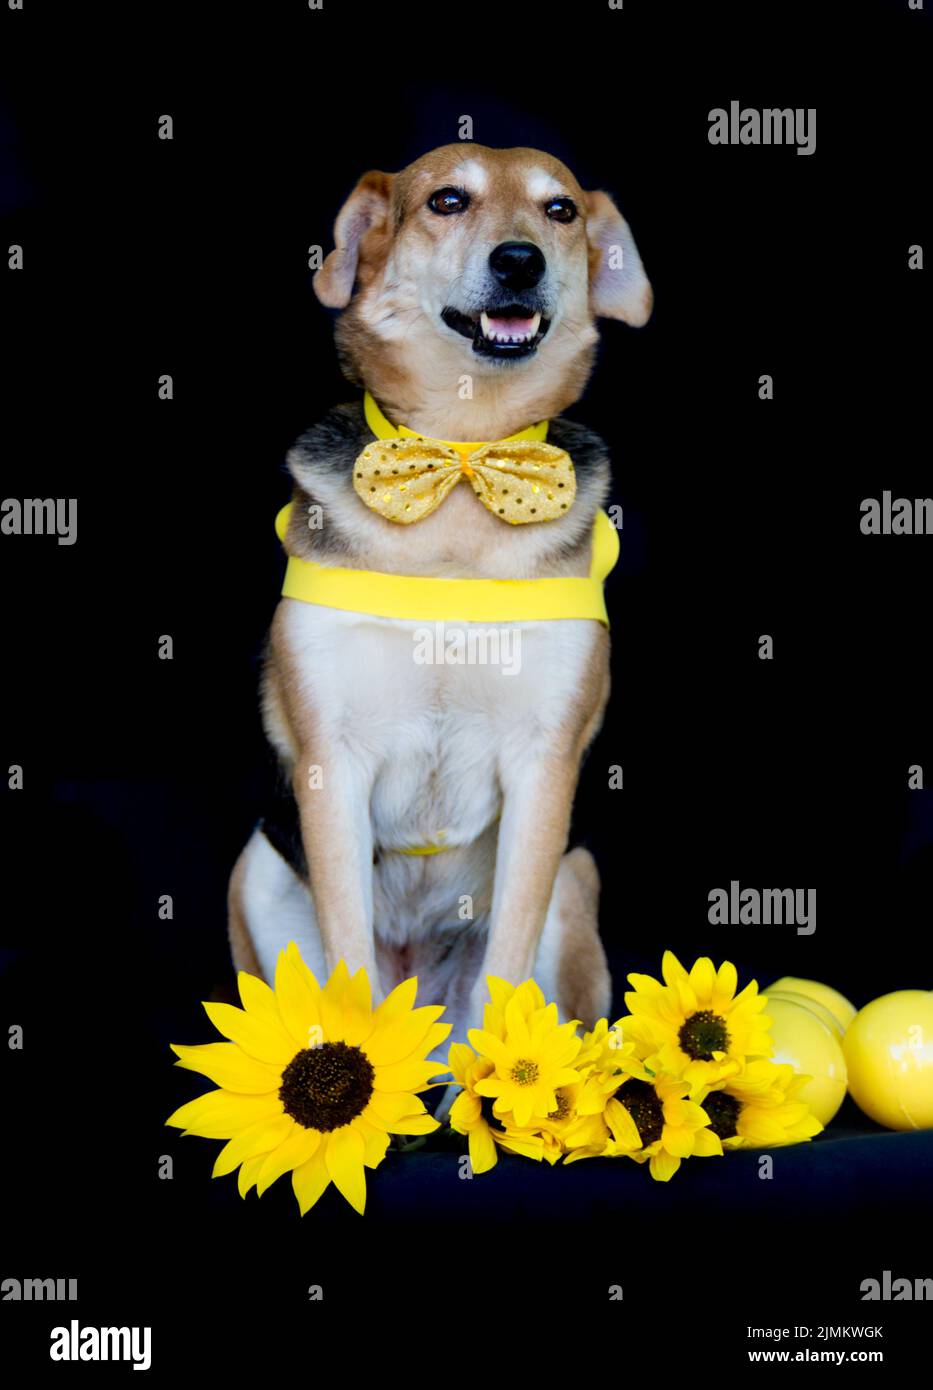 https://c8.alamy.com/comp/2JMKWGK/dog-dressed-in-bow-and-yellow-breastplate-and-sunflowers-2JMKWGK.jpg